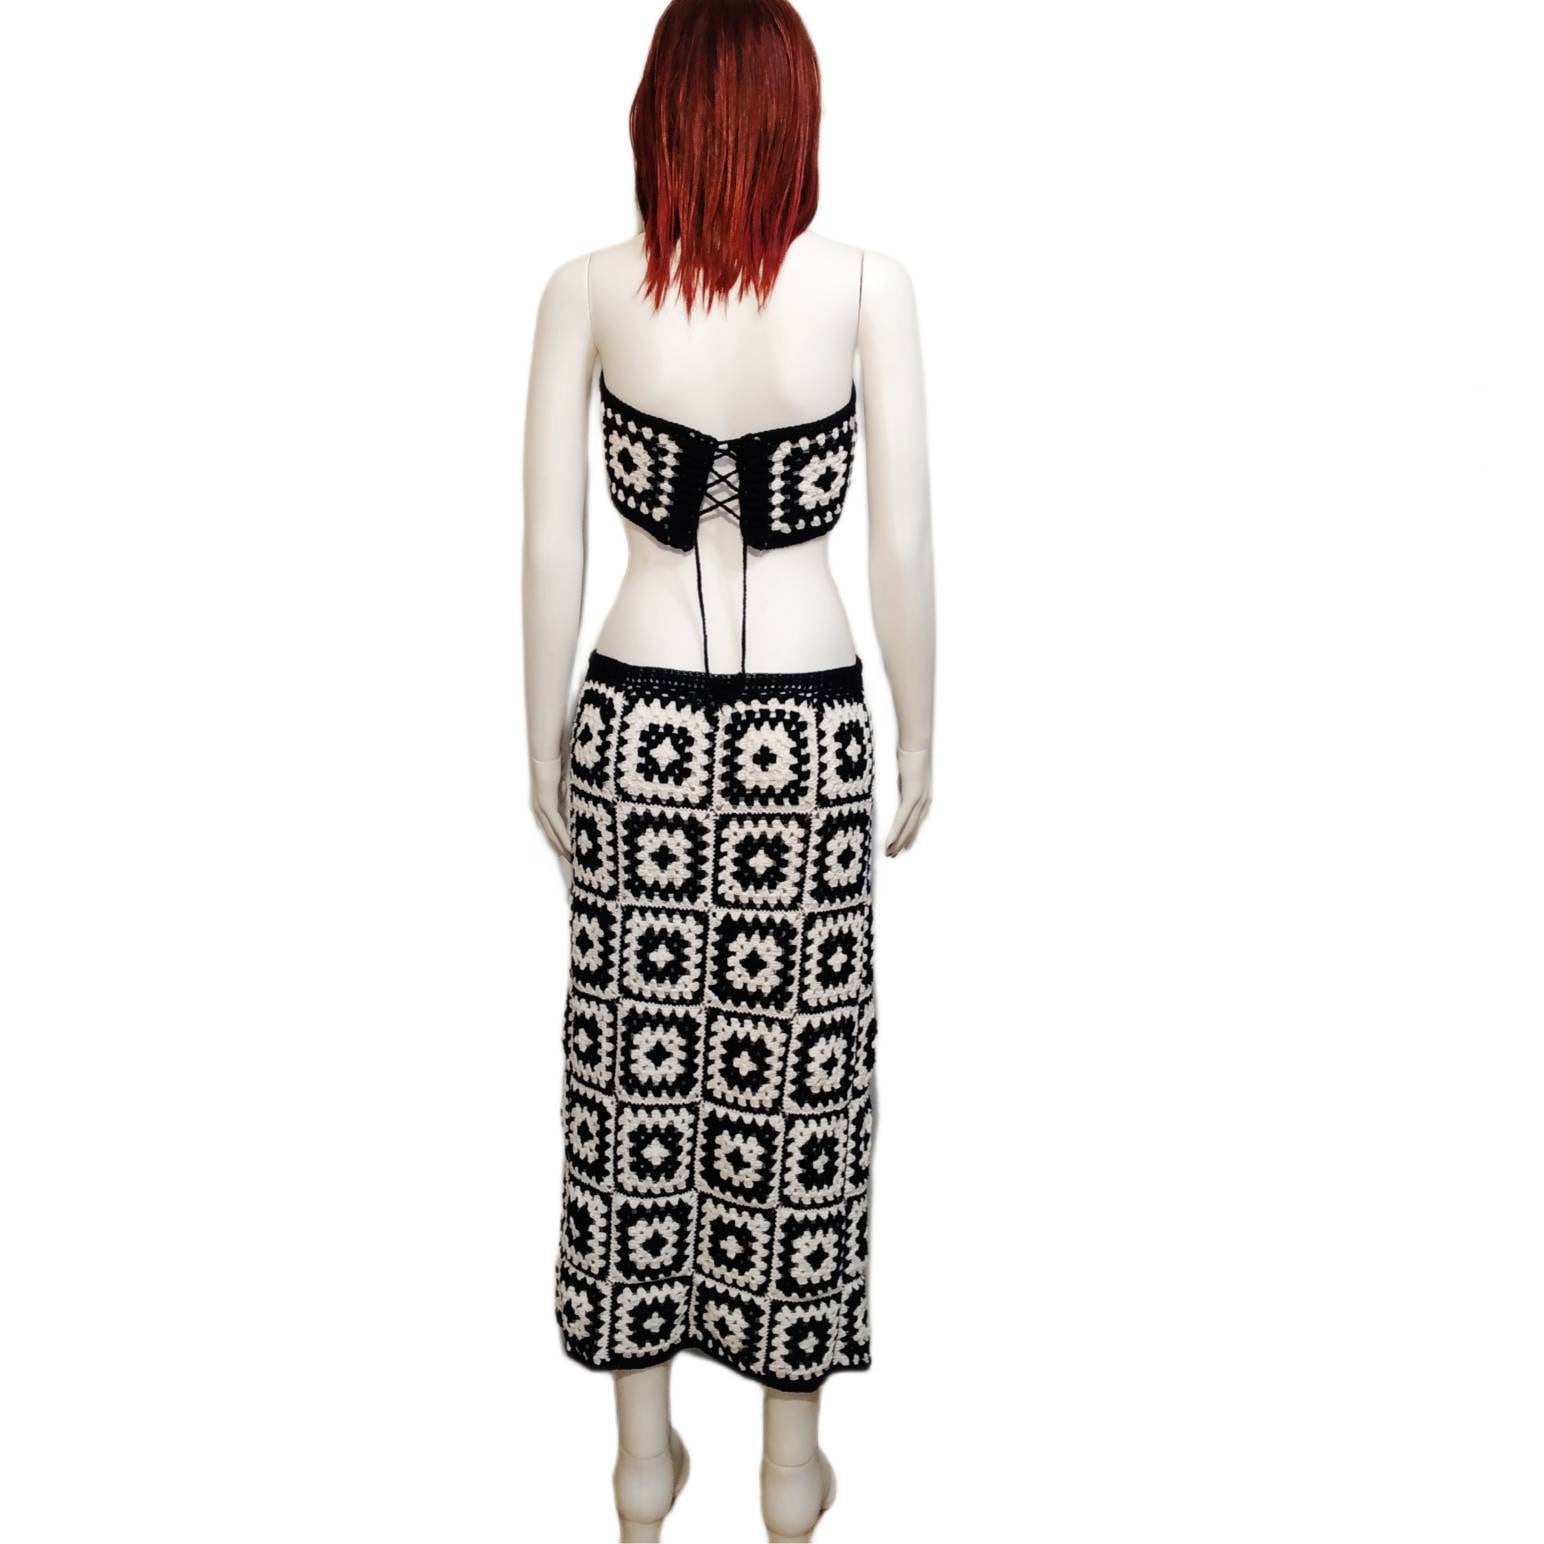 Granny Square Afghan Cotton Black White Top Skirt Plus Size - Etsy